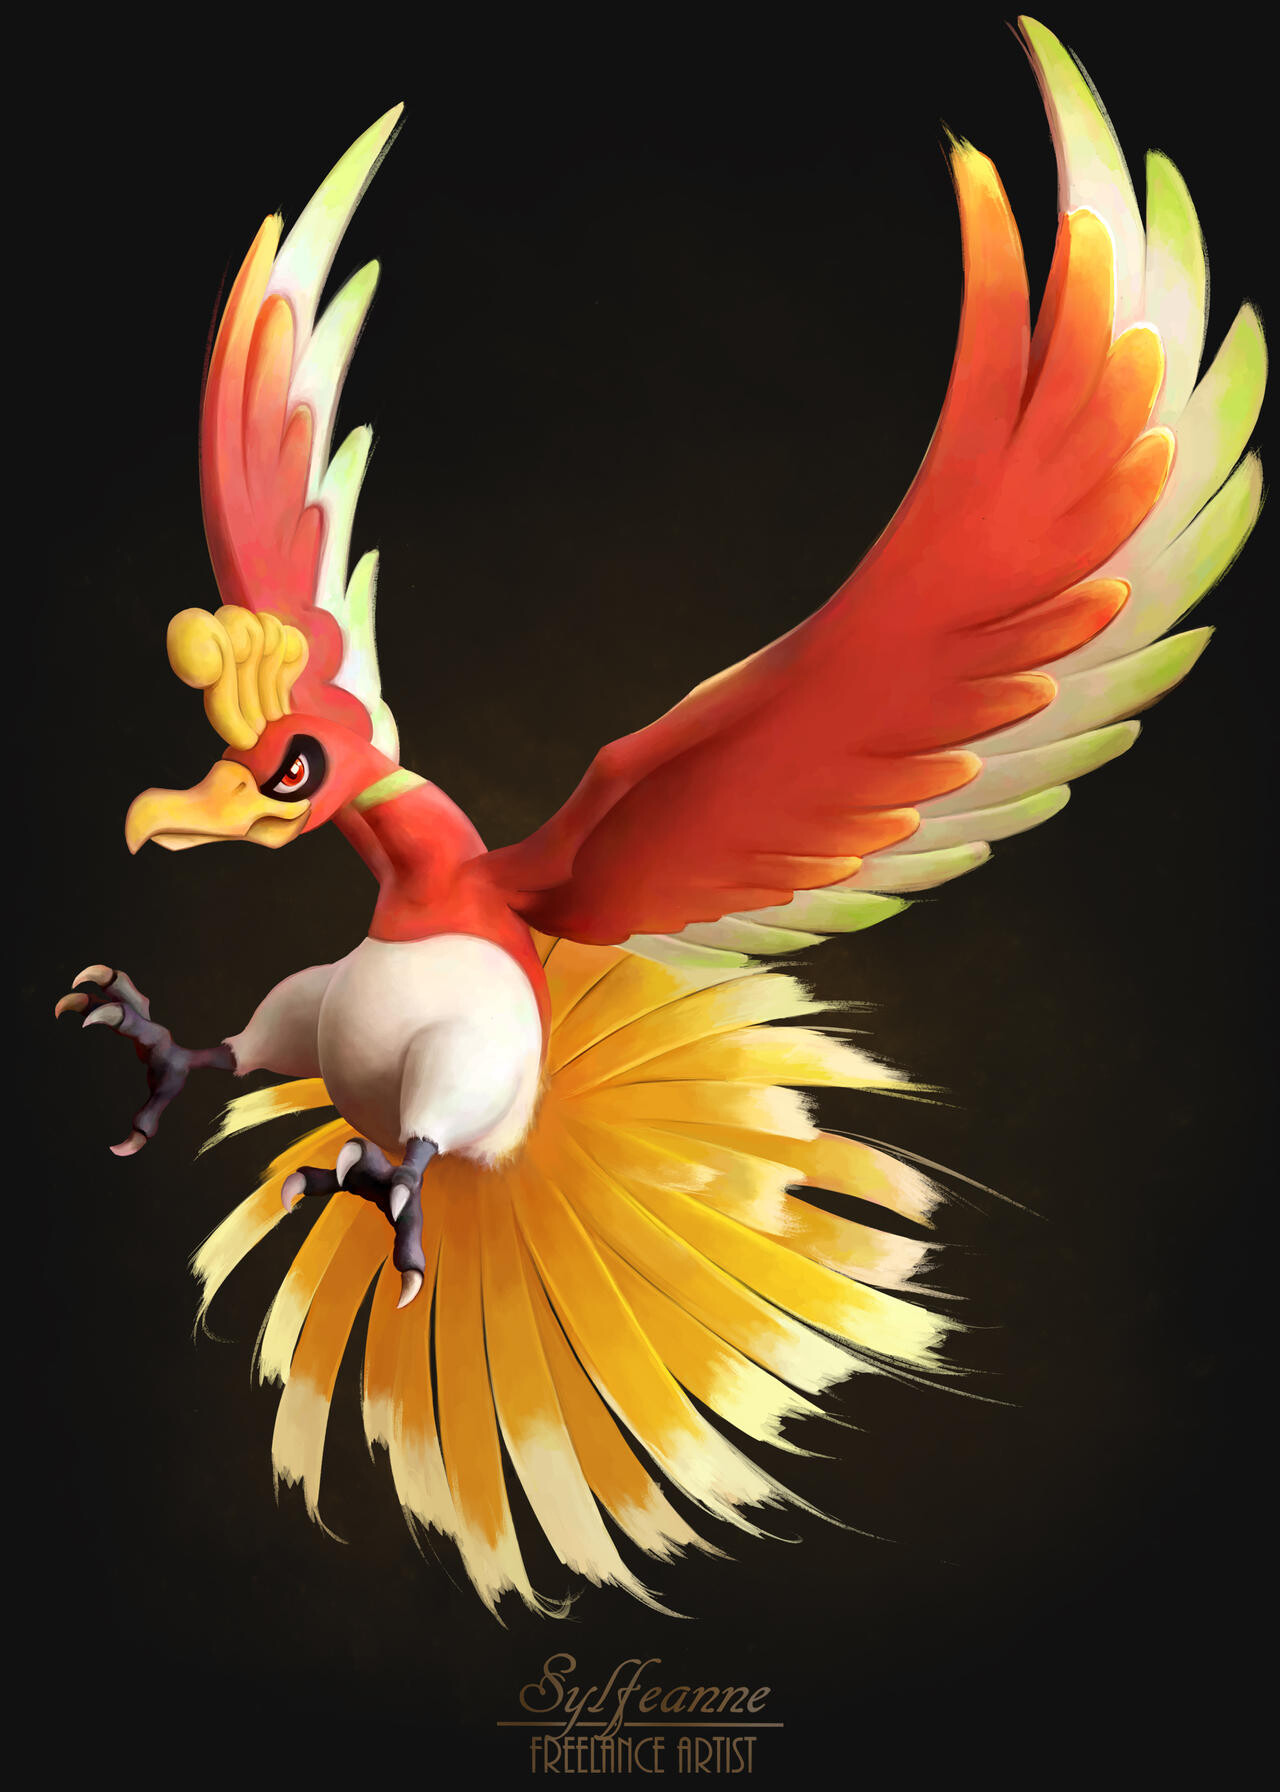 Ho-Oh the Legendary Rainbow Bird, Guardian of The Land